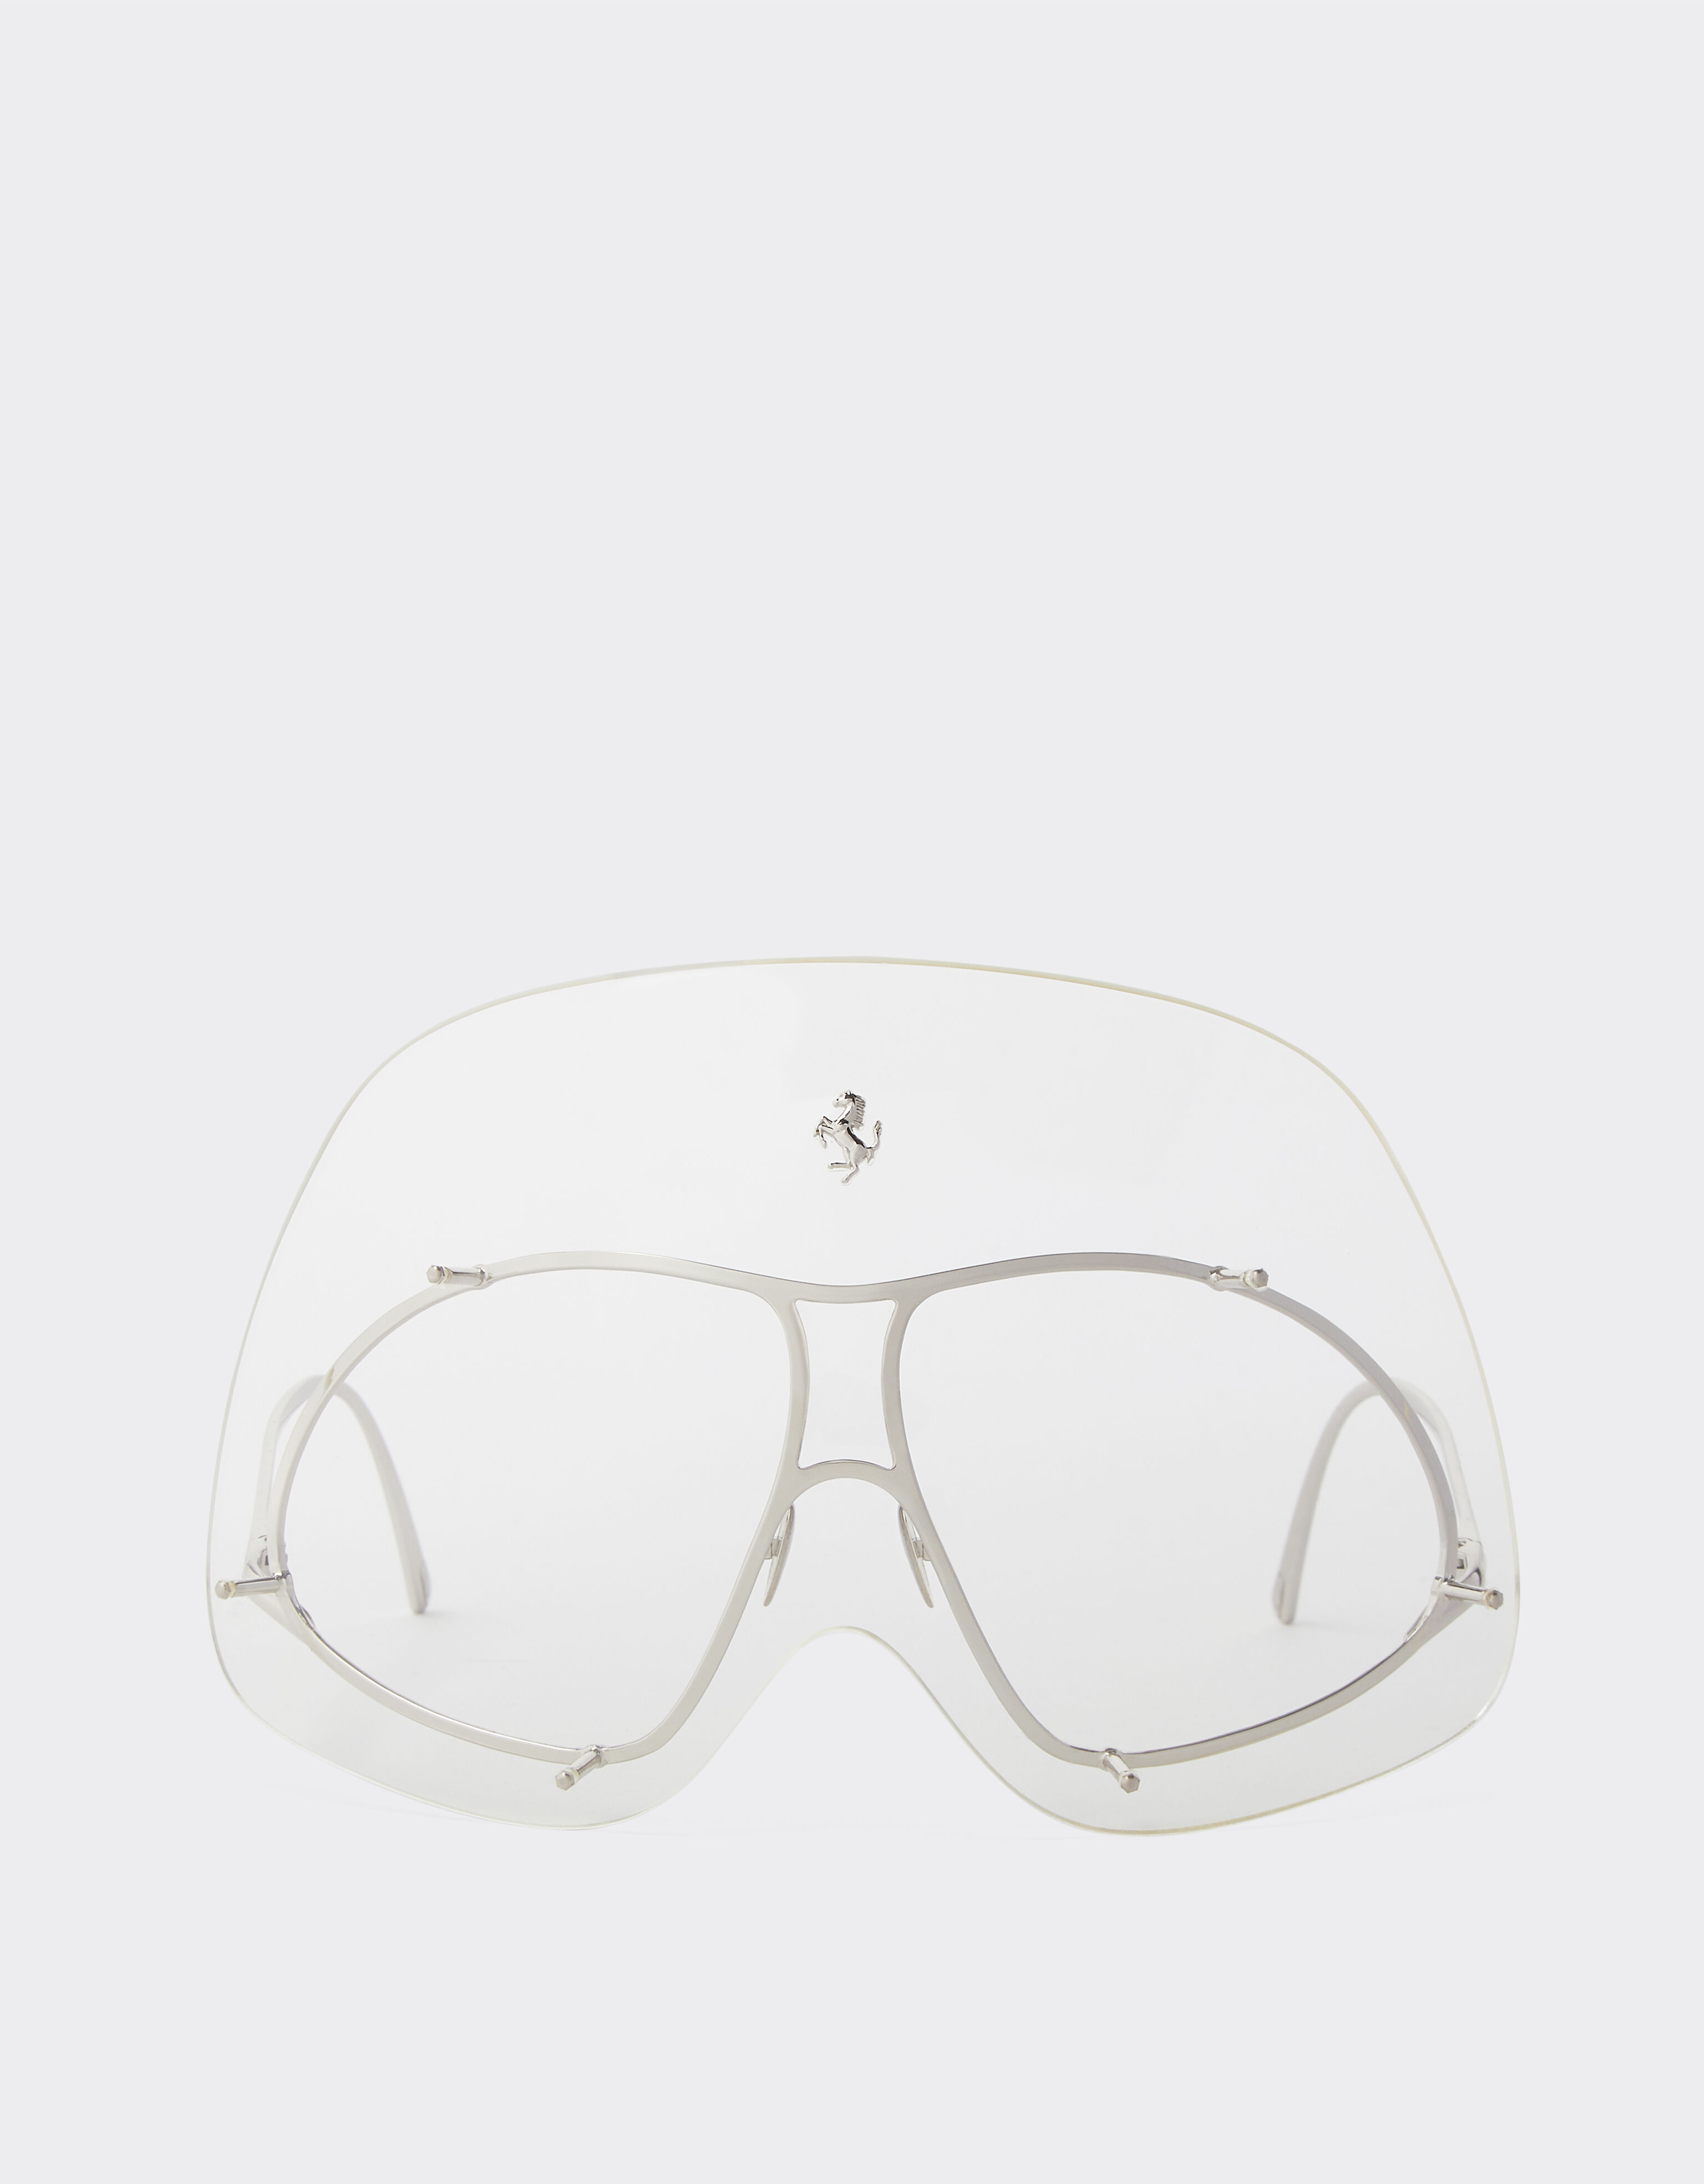 Ferrari Ferrari Limited Edition metal sunglasses with transparent shield Dark Grey 21242f